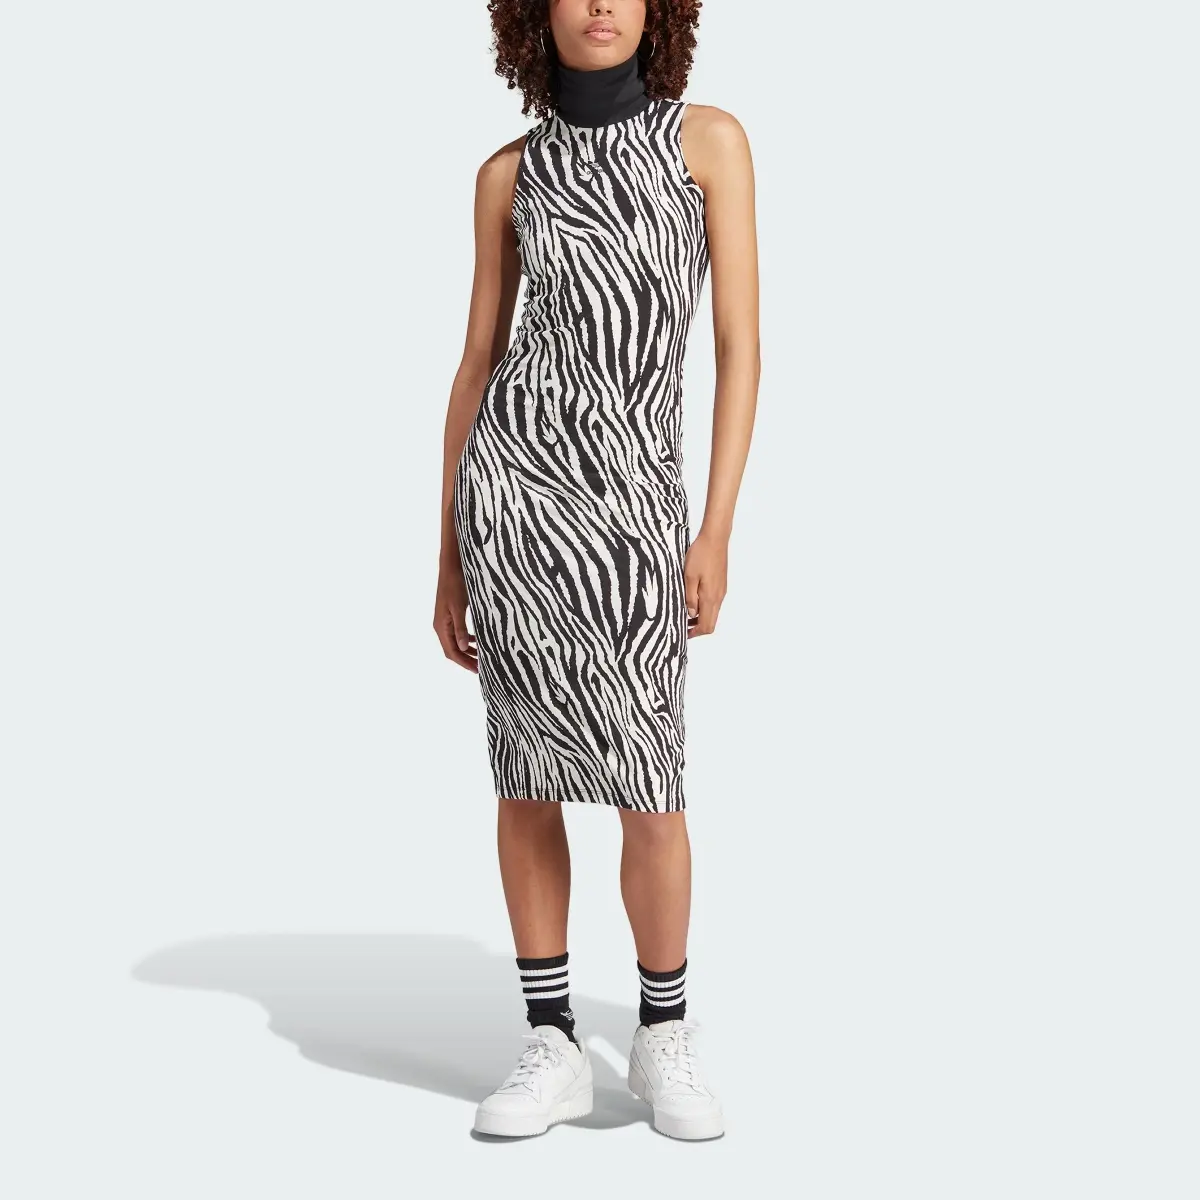 Adidas Sukienka Allover Zebra Animal Print. 1